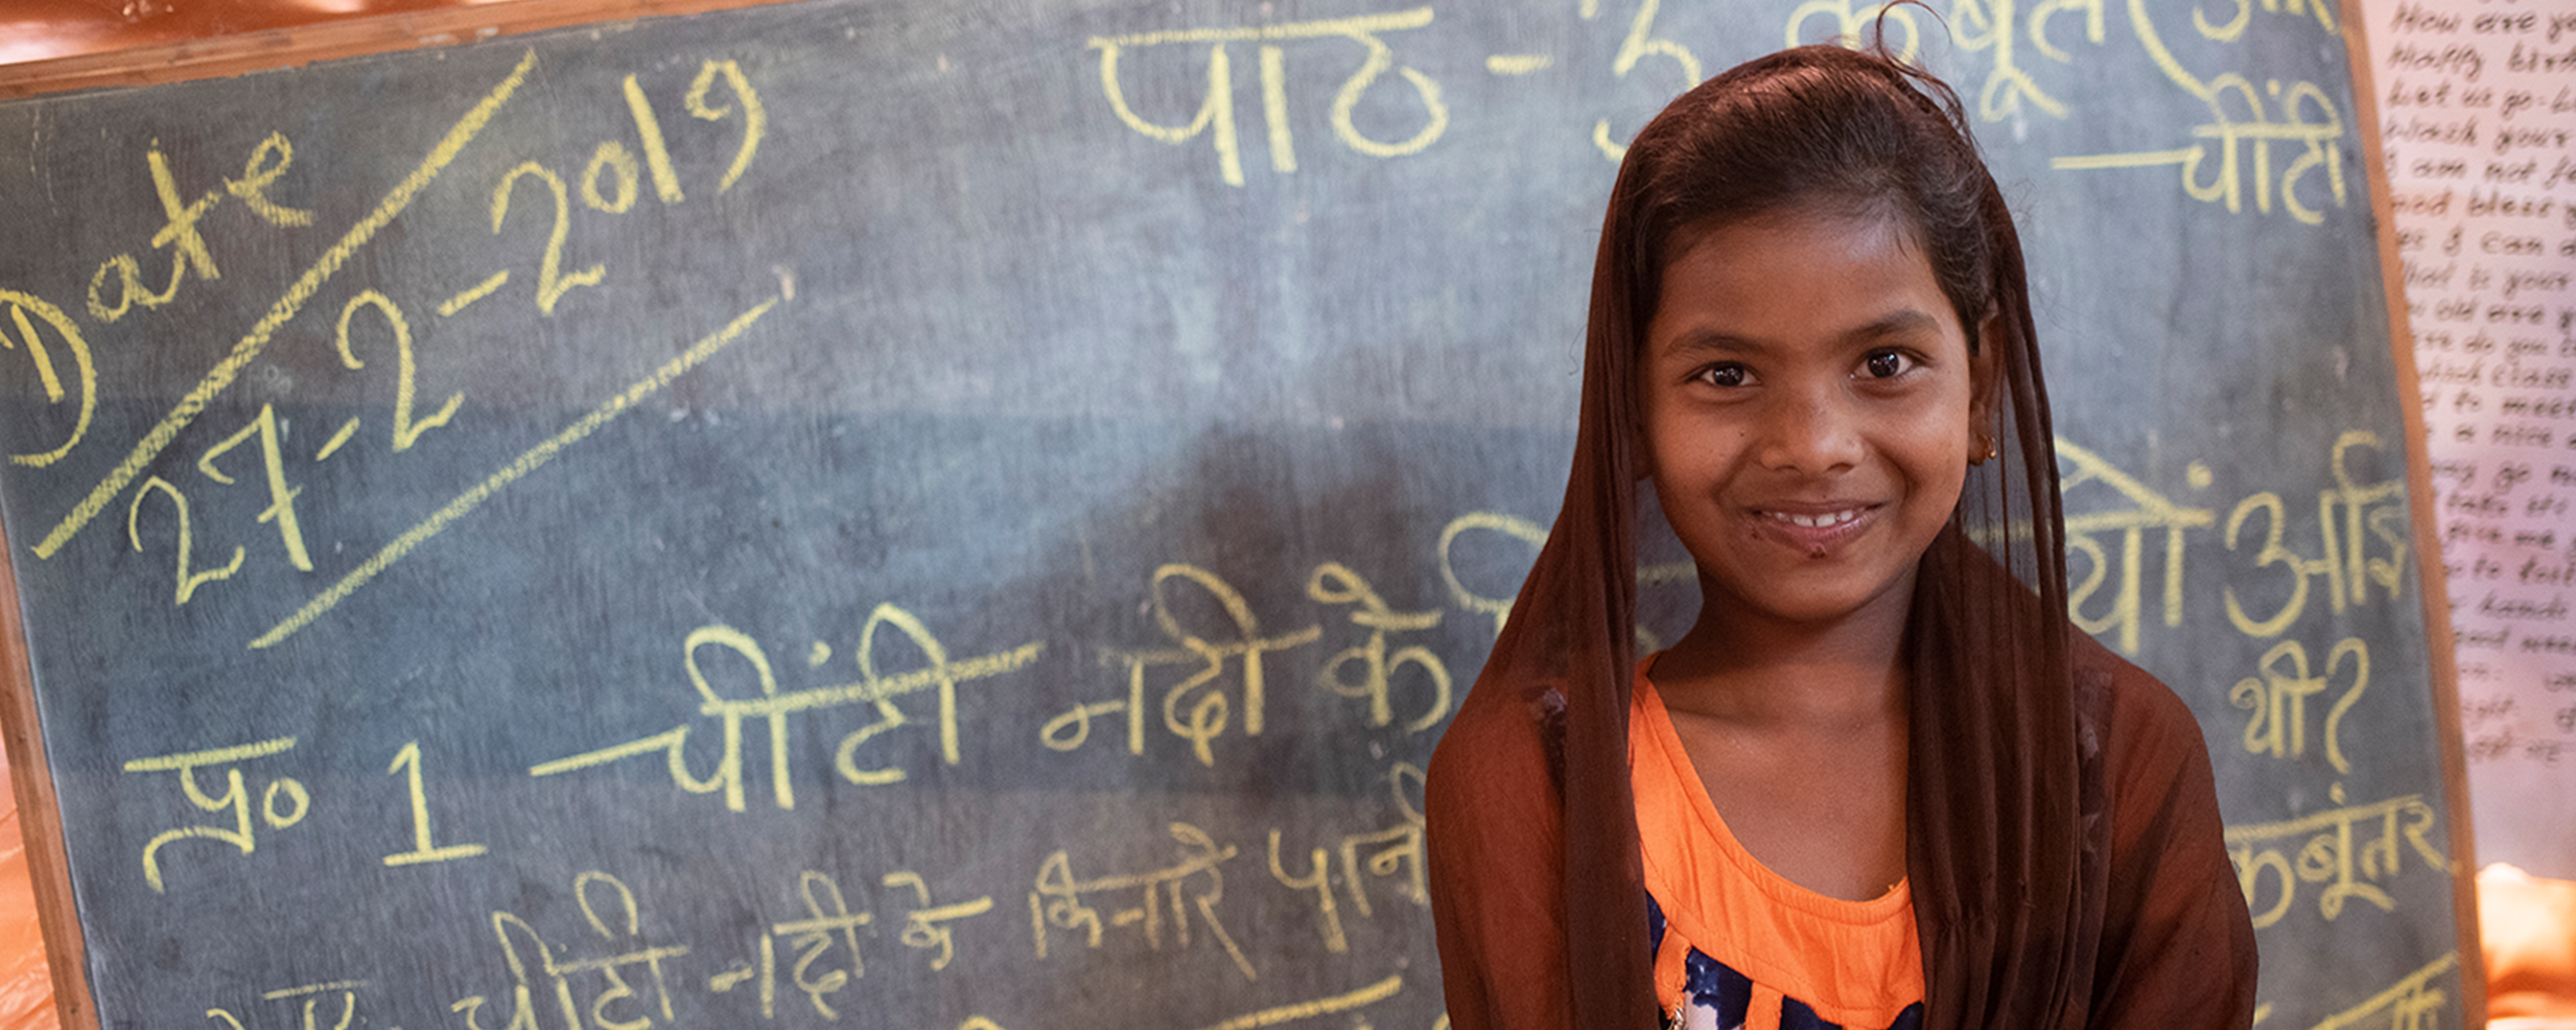 Girls' education | Malala Fund